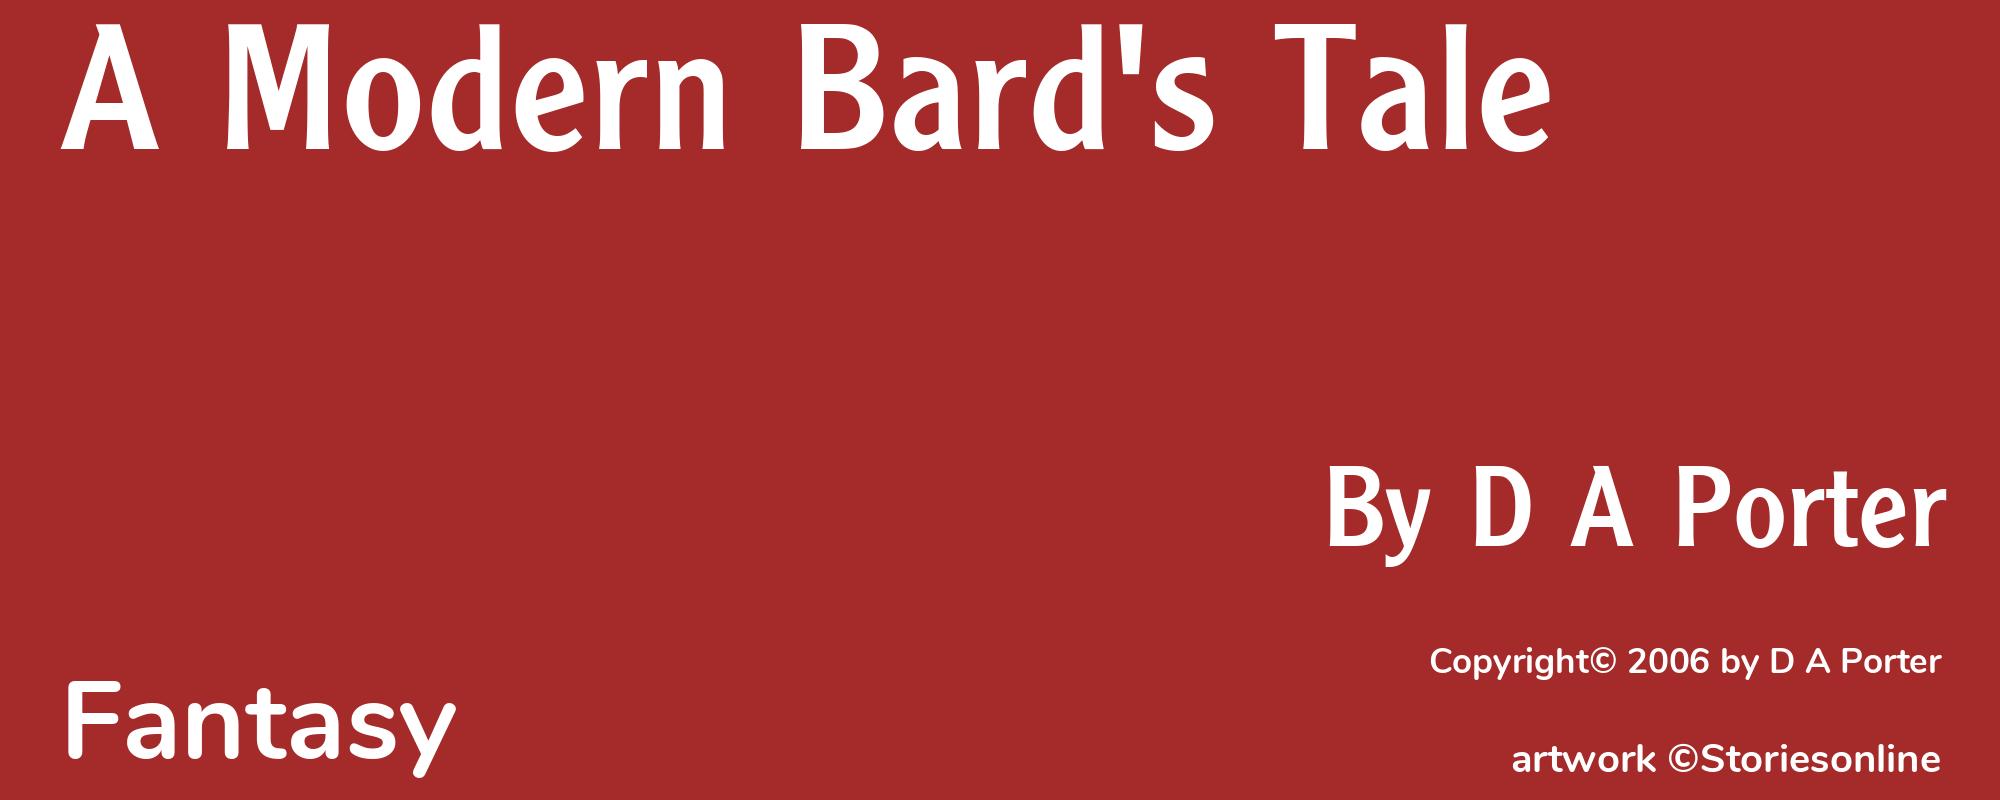 A Modern Bard's Tale - Cover